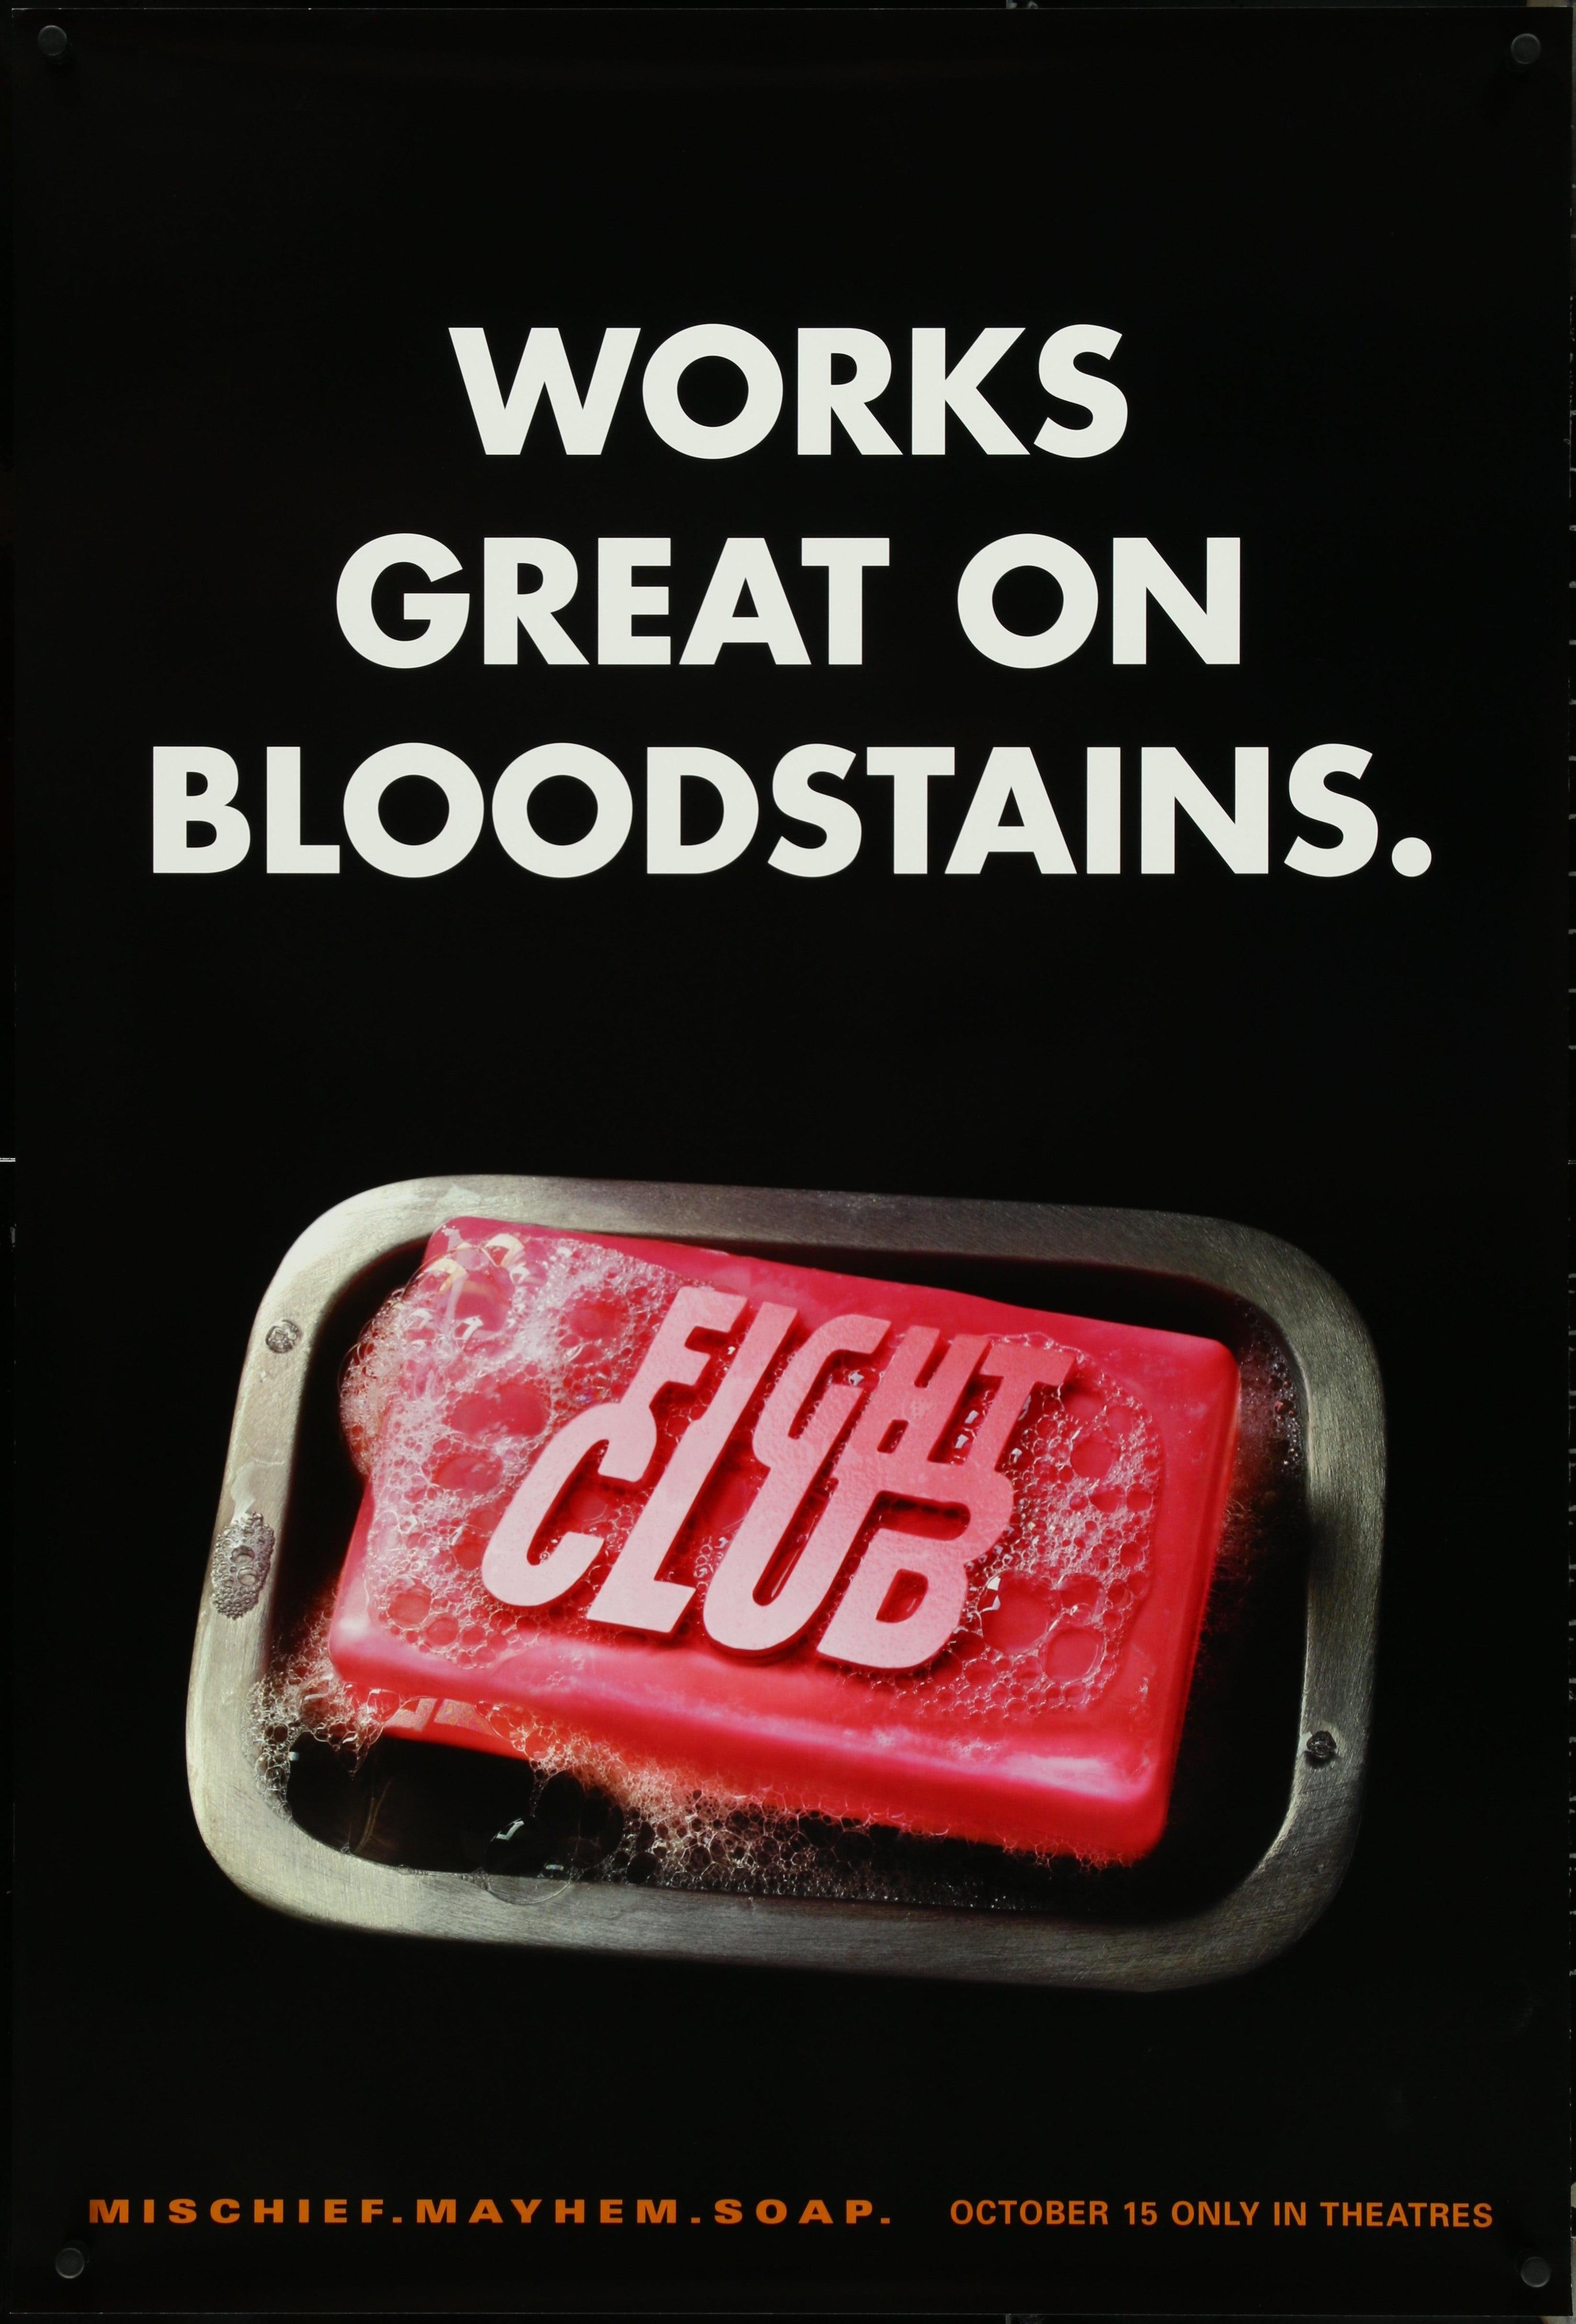 Fight Club Movie Poster 1999 1 Sheet (27x41)